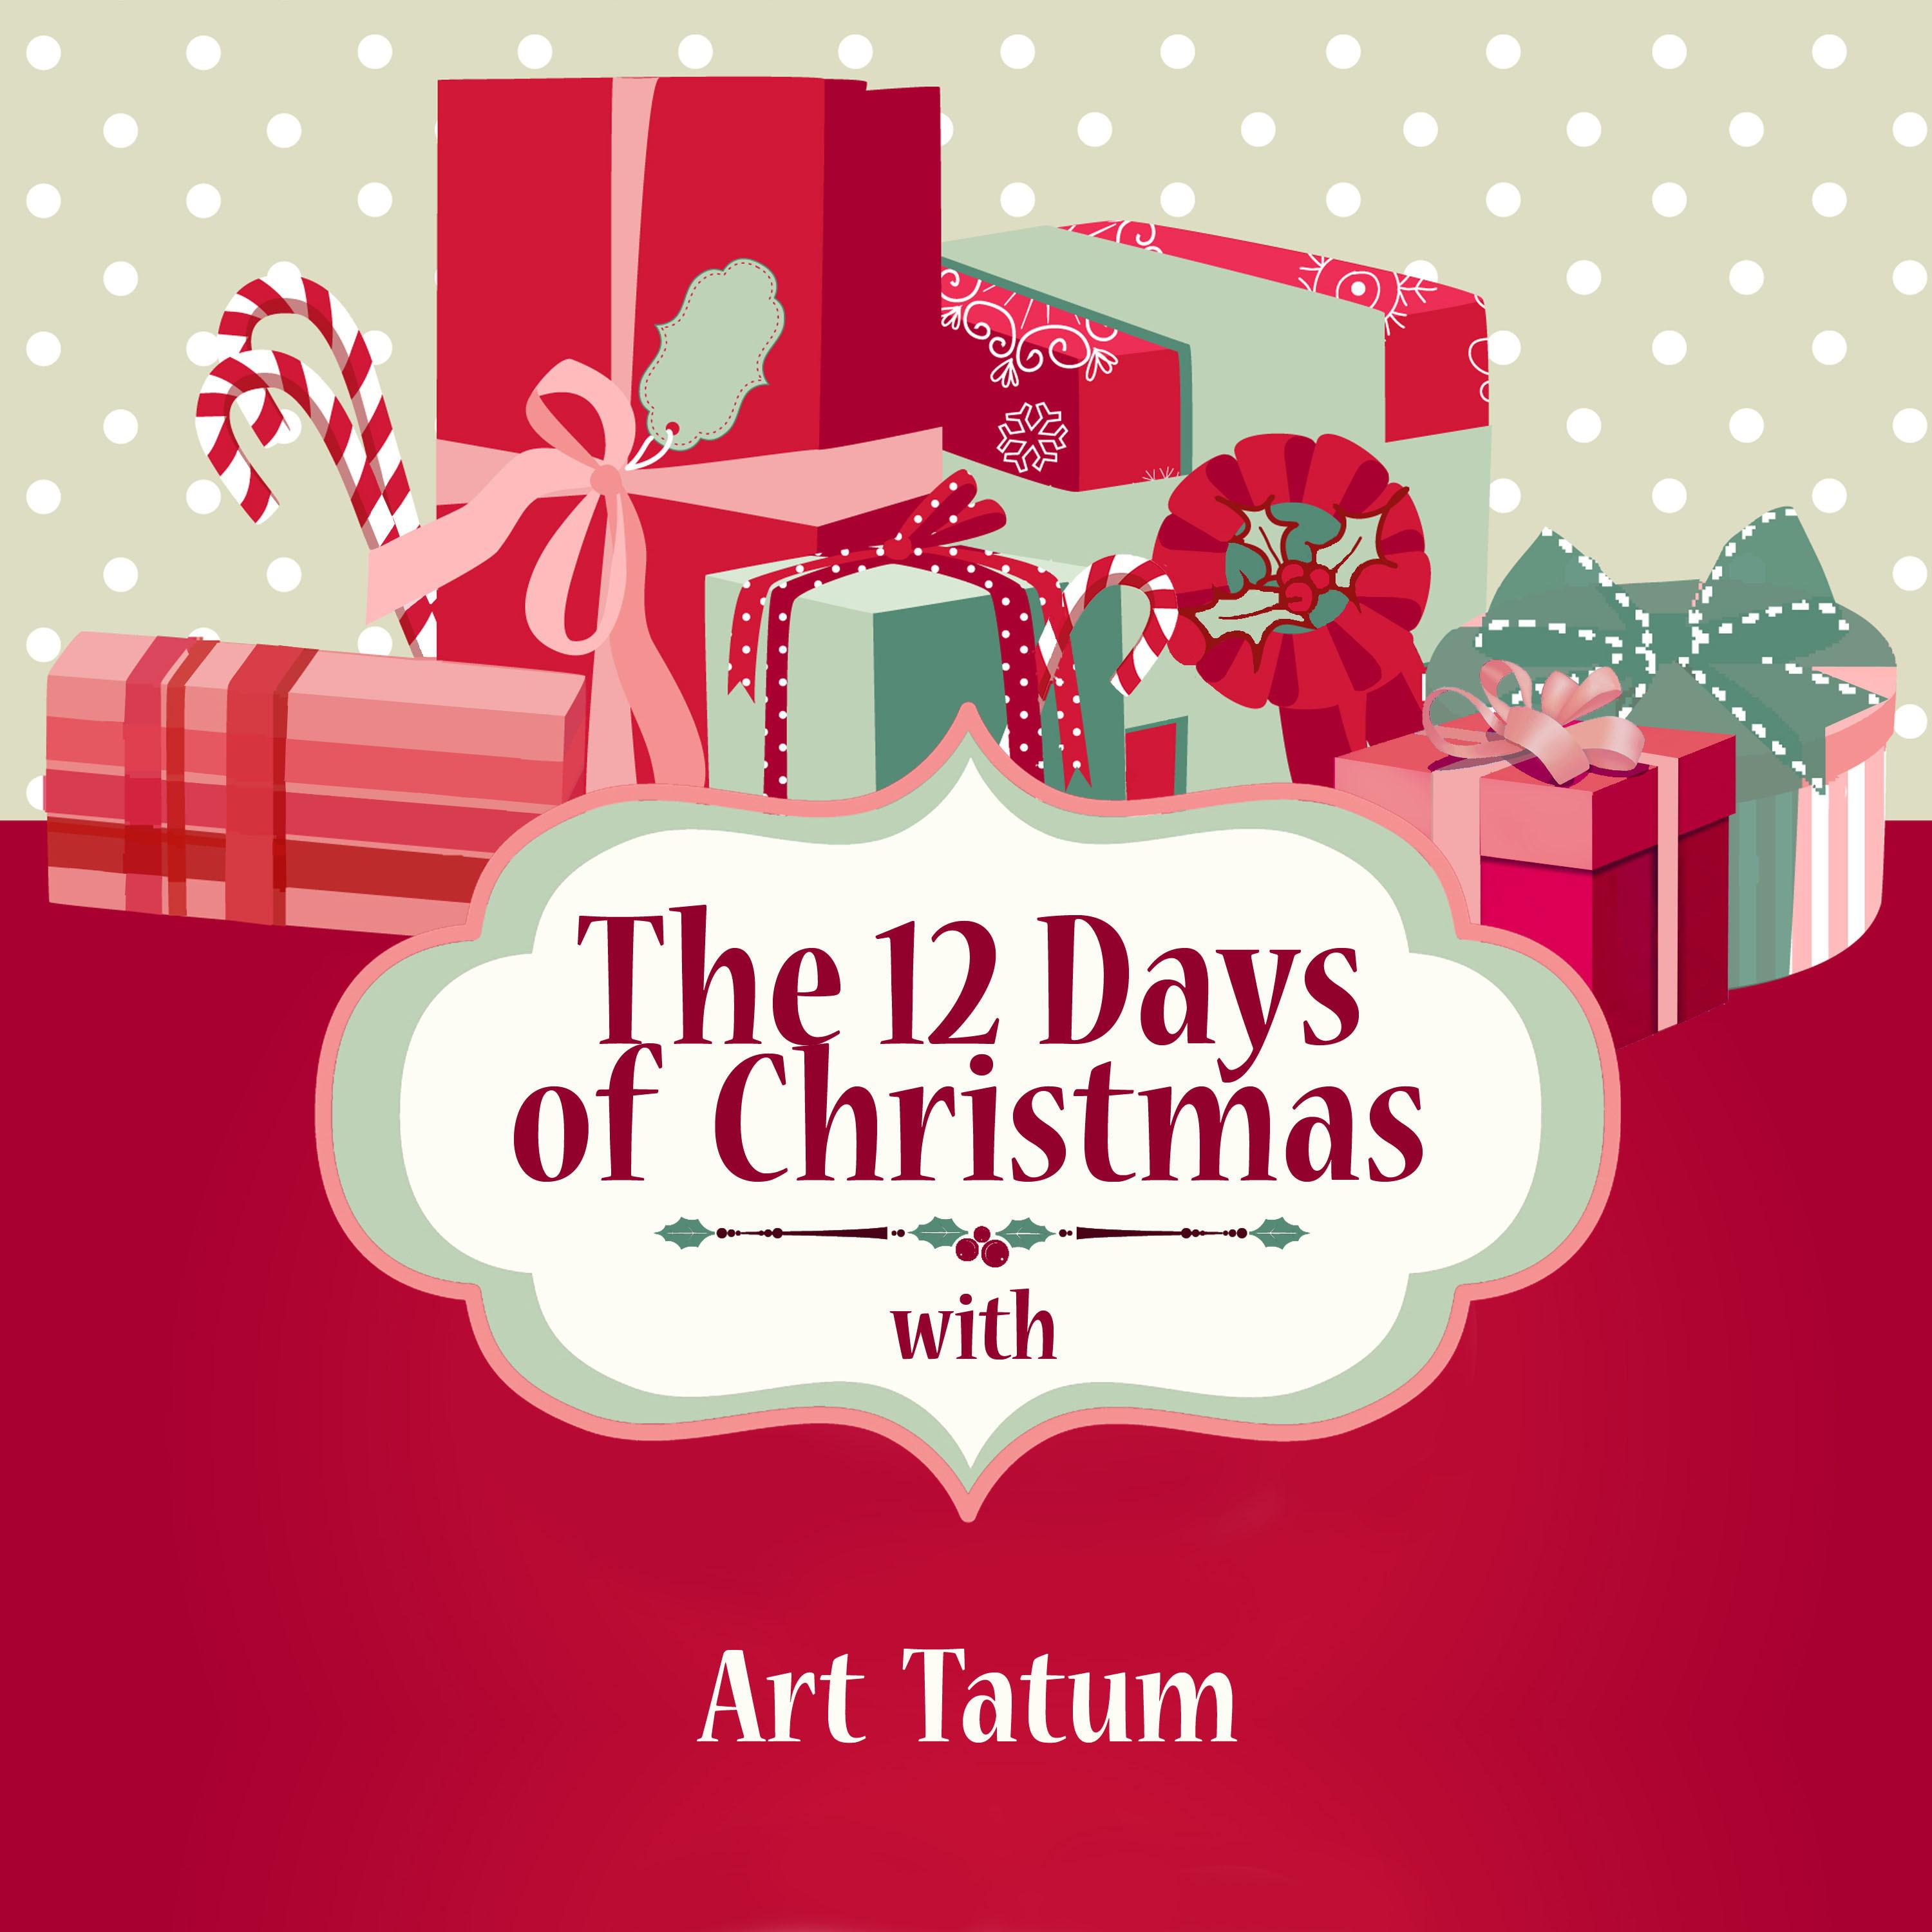 The 12 Days of Christmas with Art Tatum